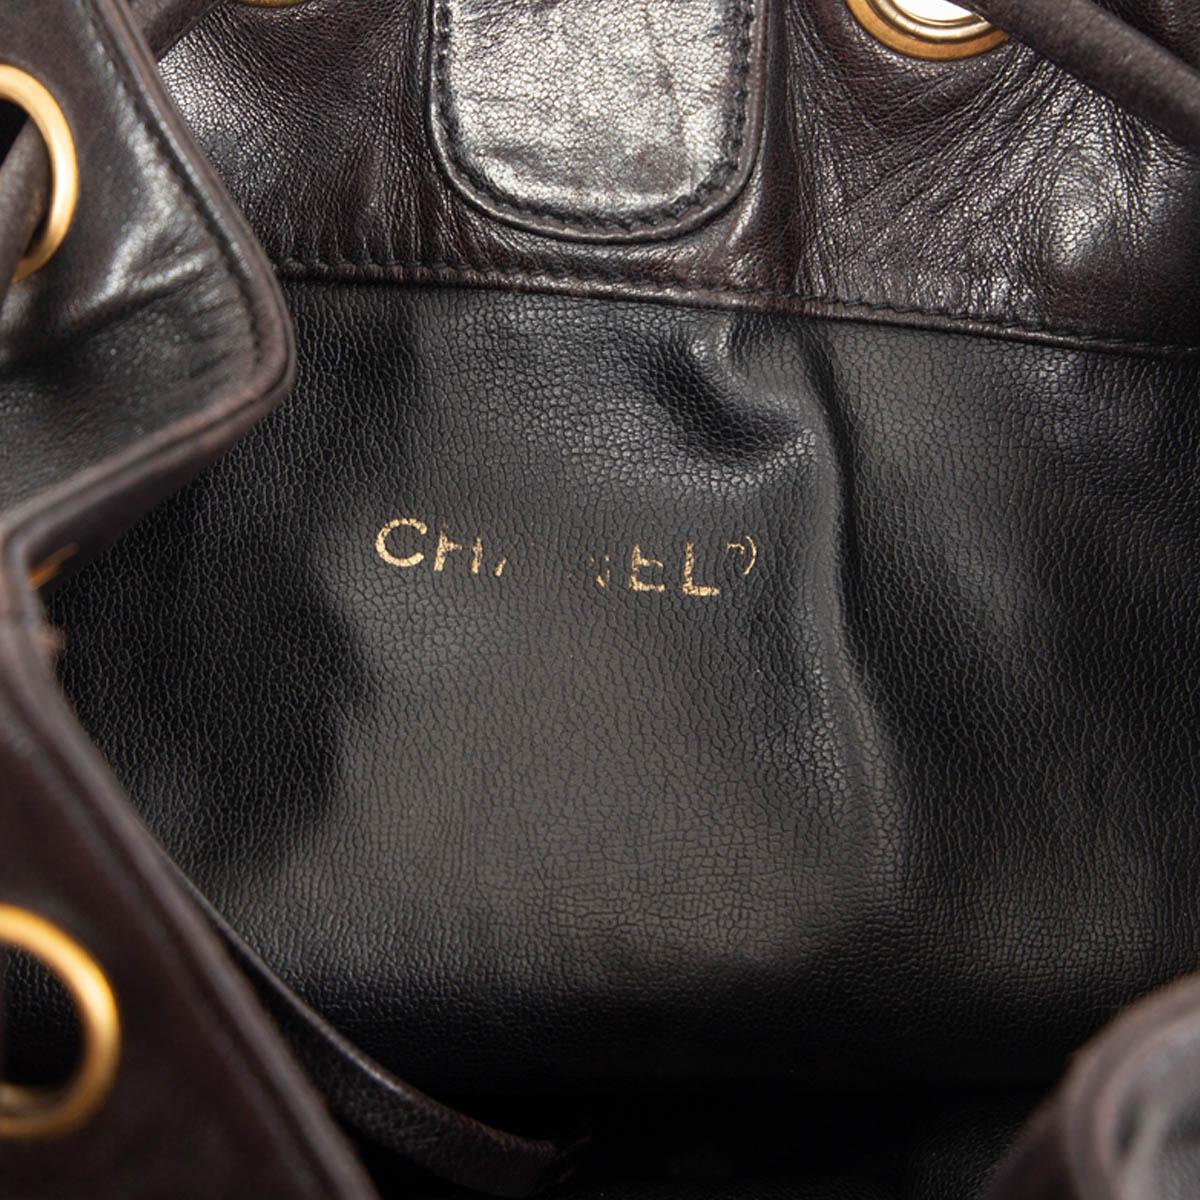 Women's CHANEL black lambskin leather LARGE CC VINTAGE Backpack Bag